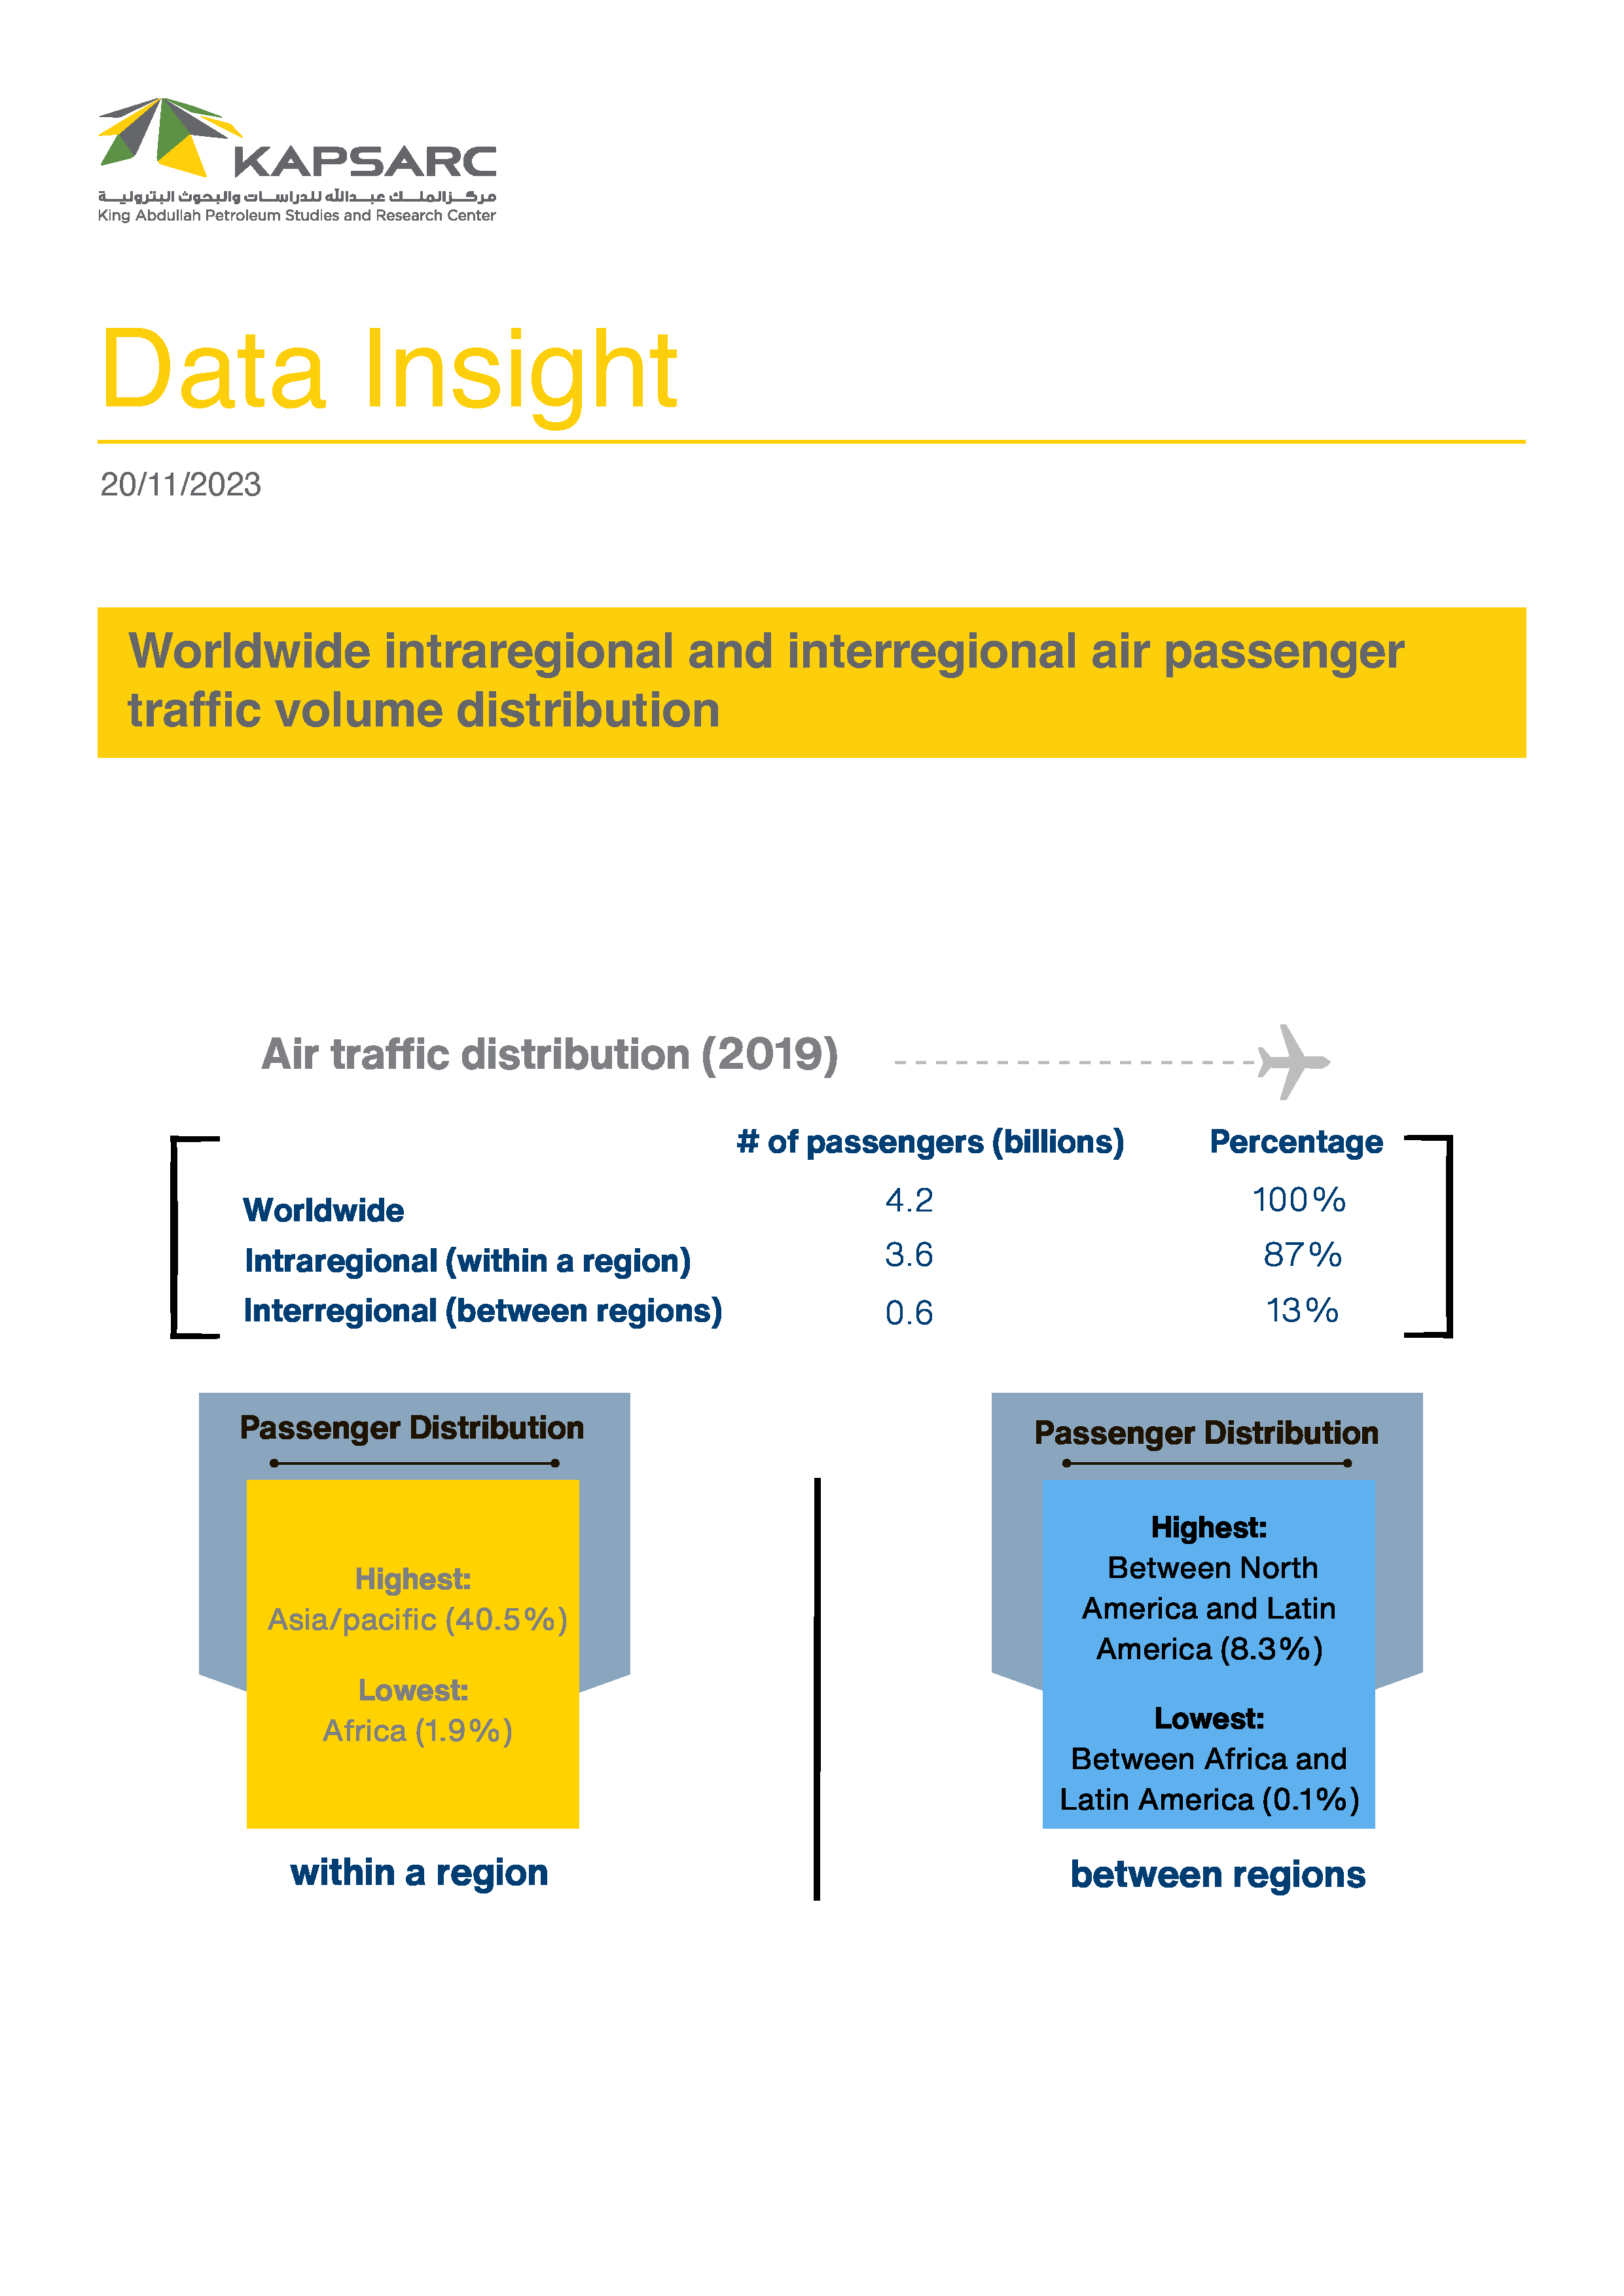 Worldwide intraregional and interregional air passenger traffic volume distribution